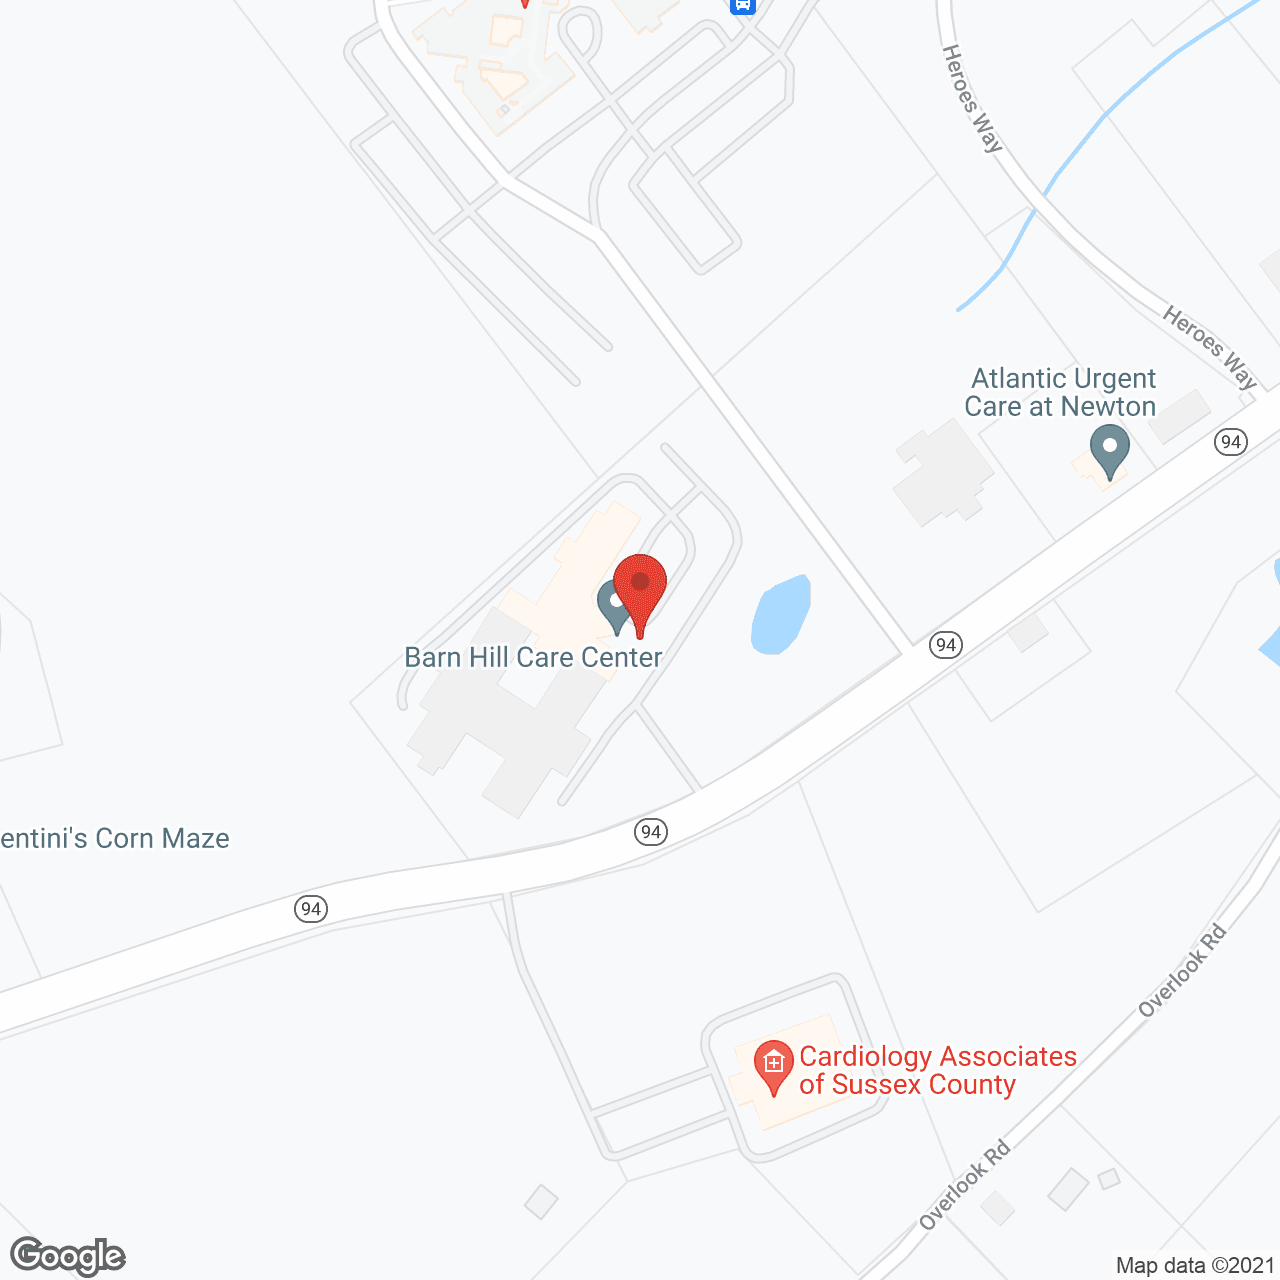 Barn Hill Care Center in google map